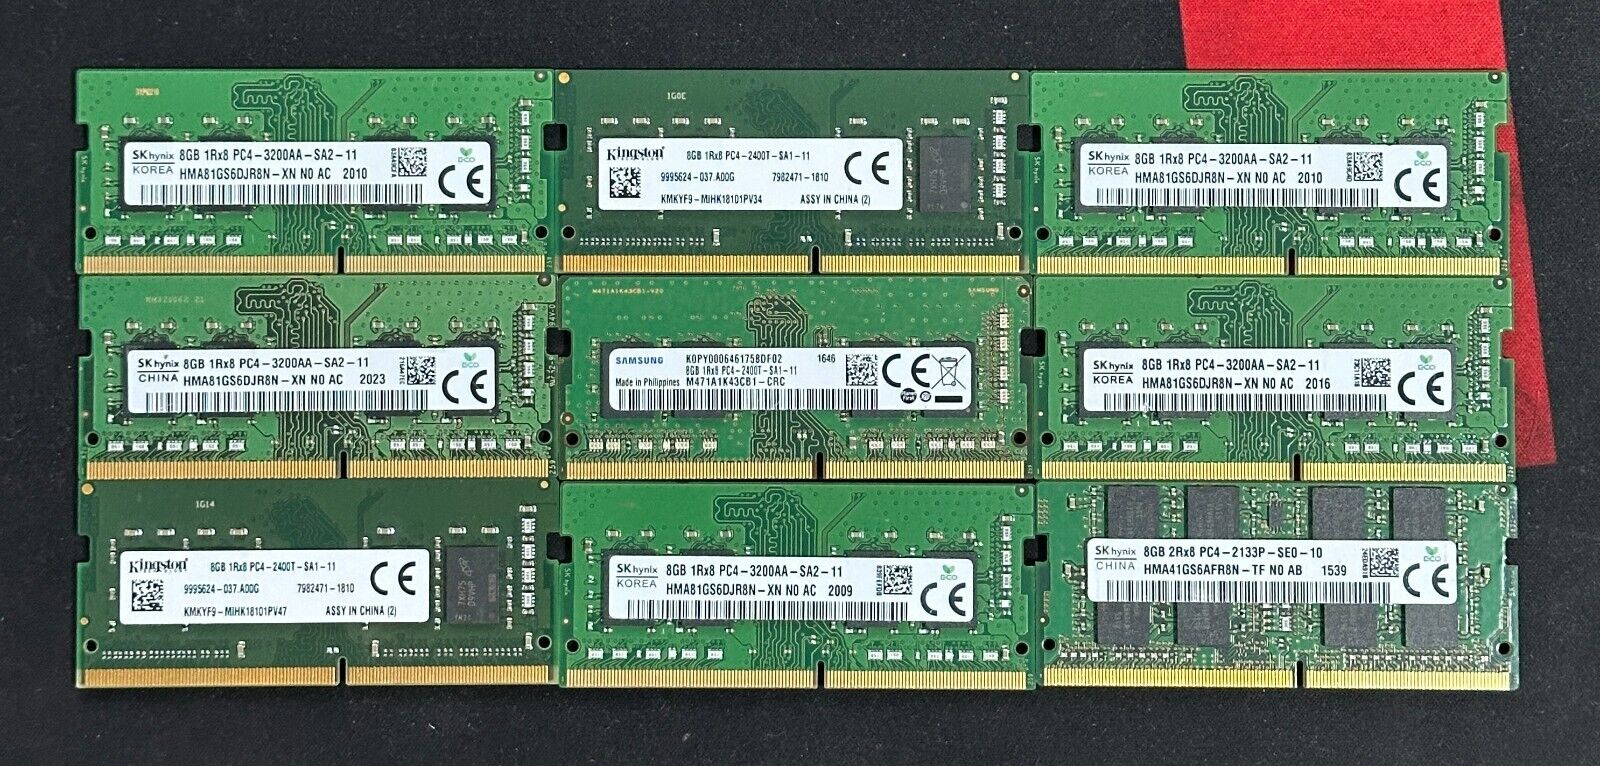 72 GIGABYTES - LOT OF  9 LAPTOP MEMORY RAM MODULES 8GB EACH TOP BRANDS